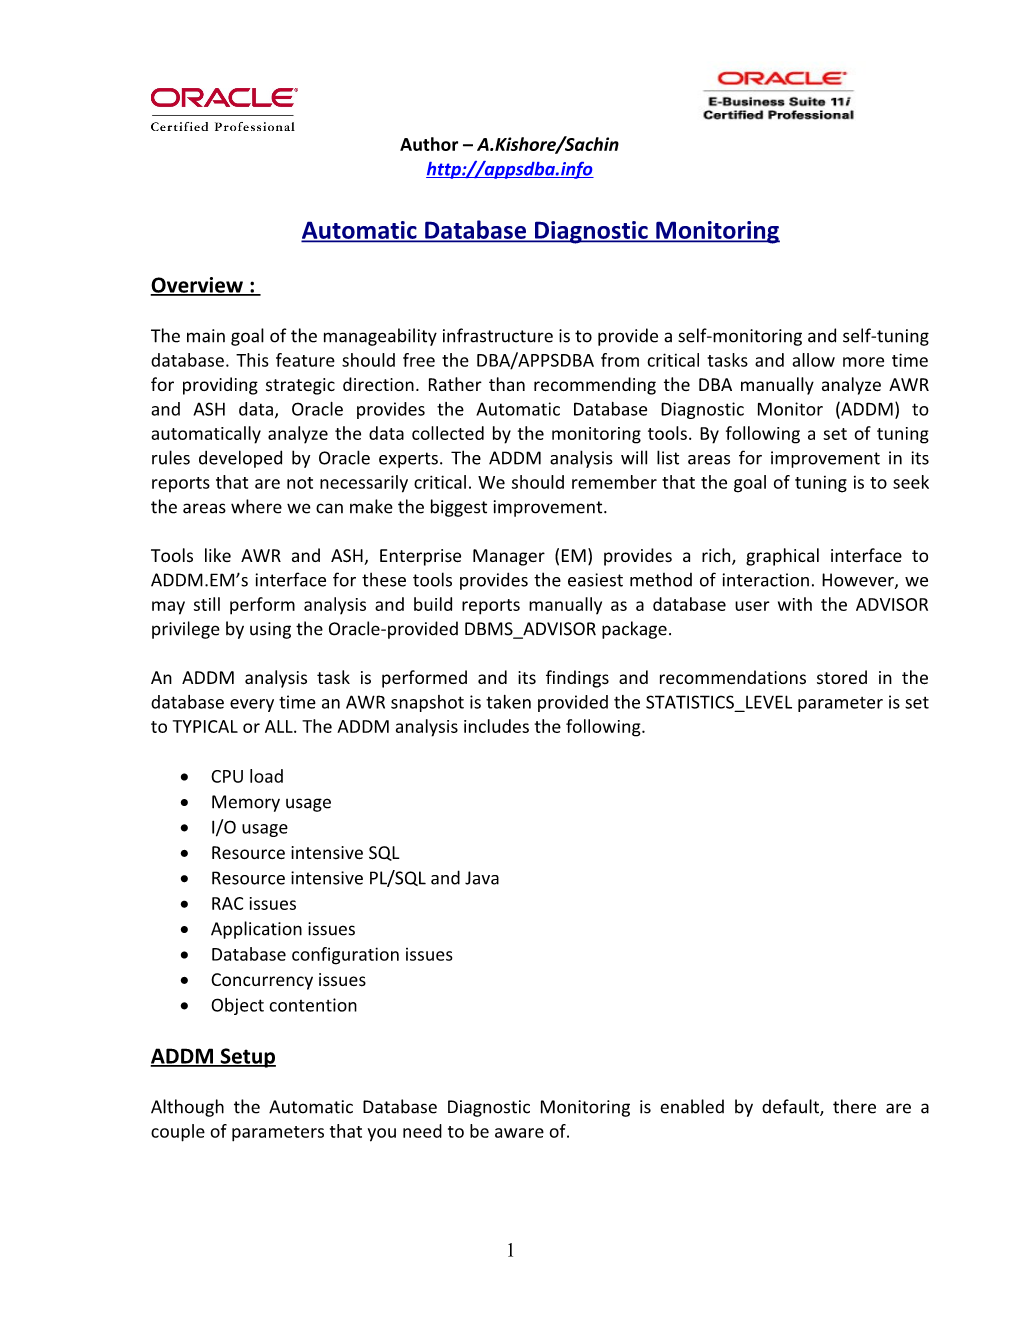 Automatic Database Diagnostic Monitoring